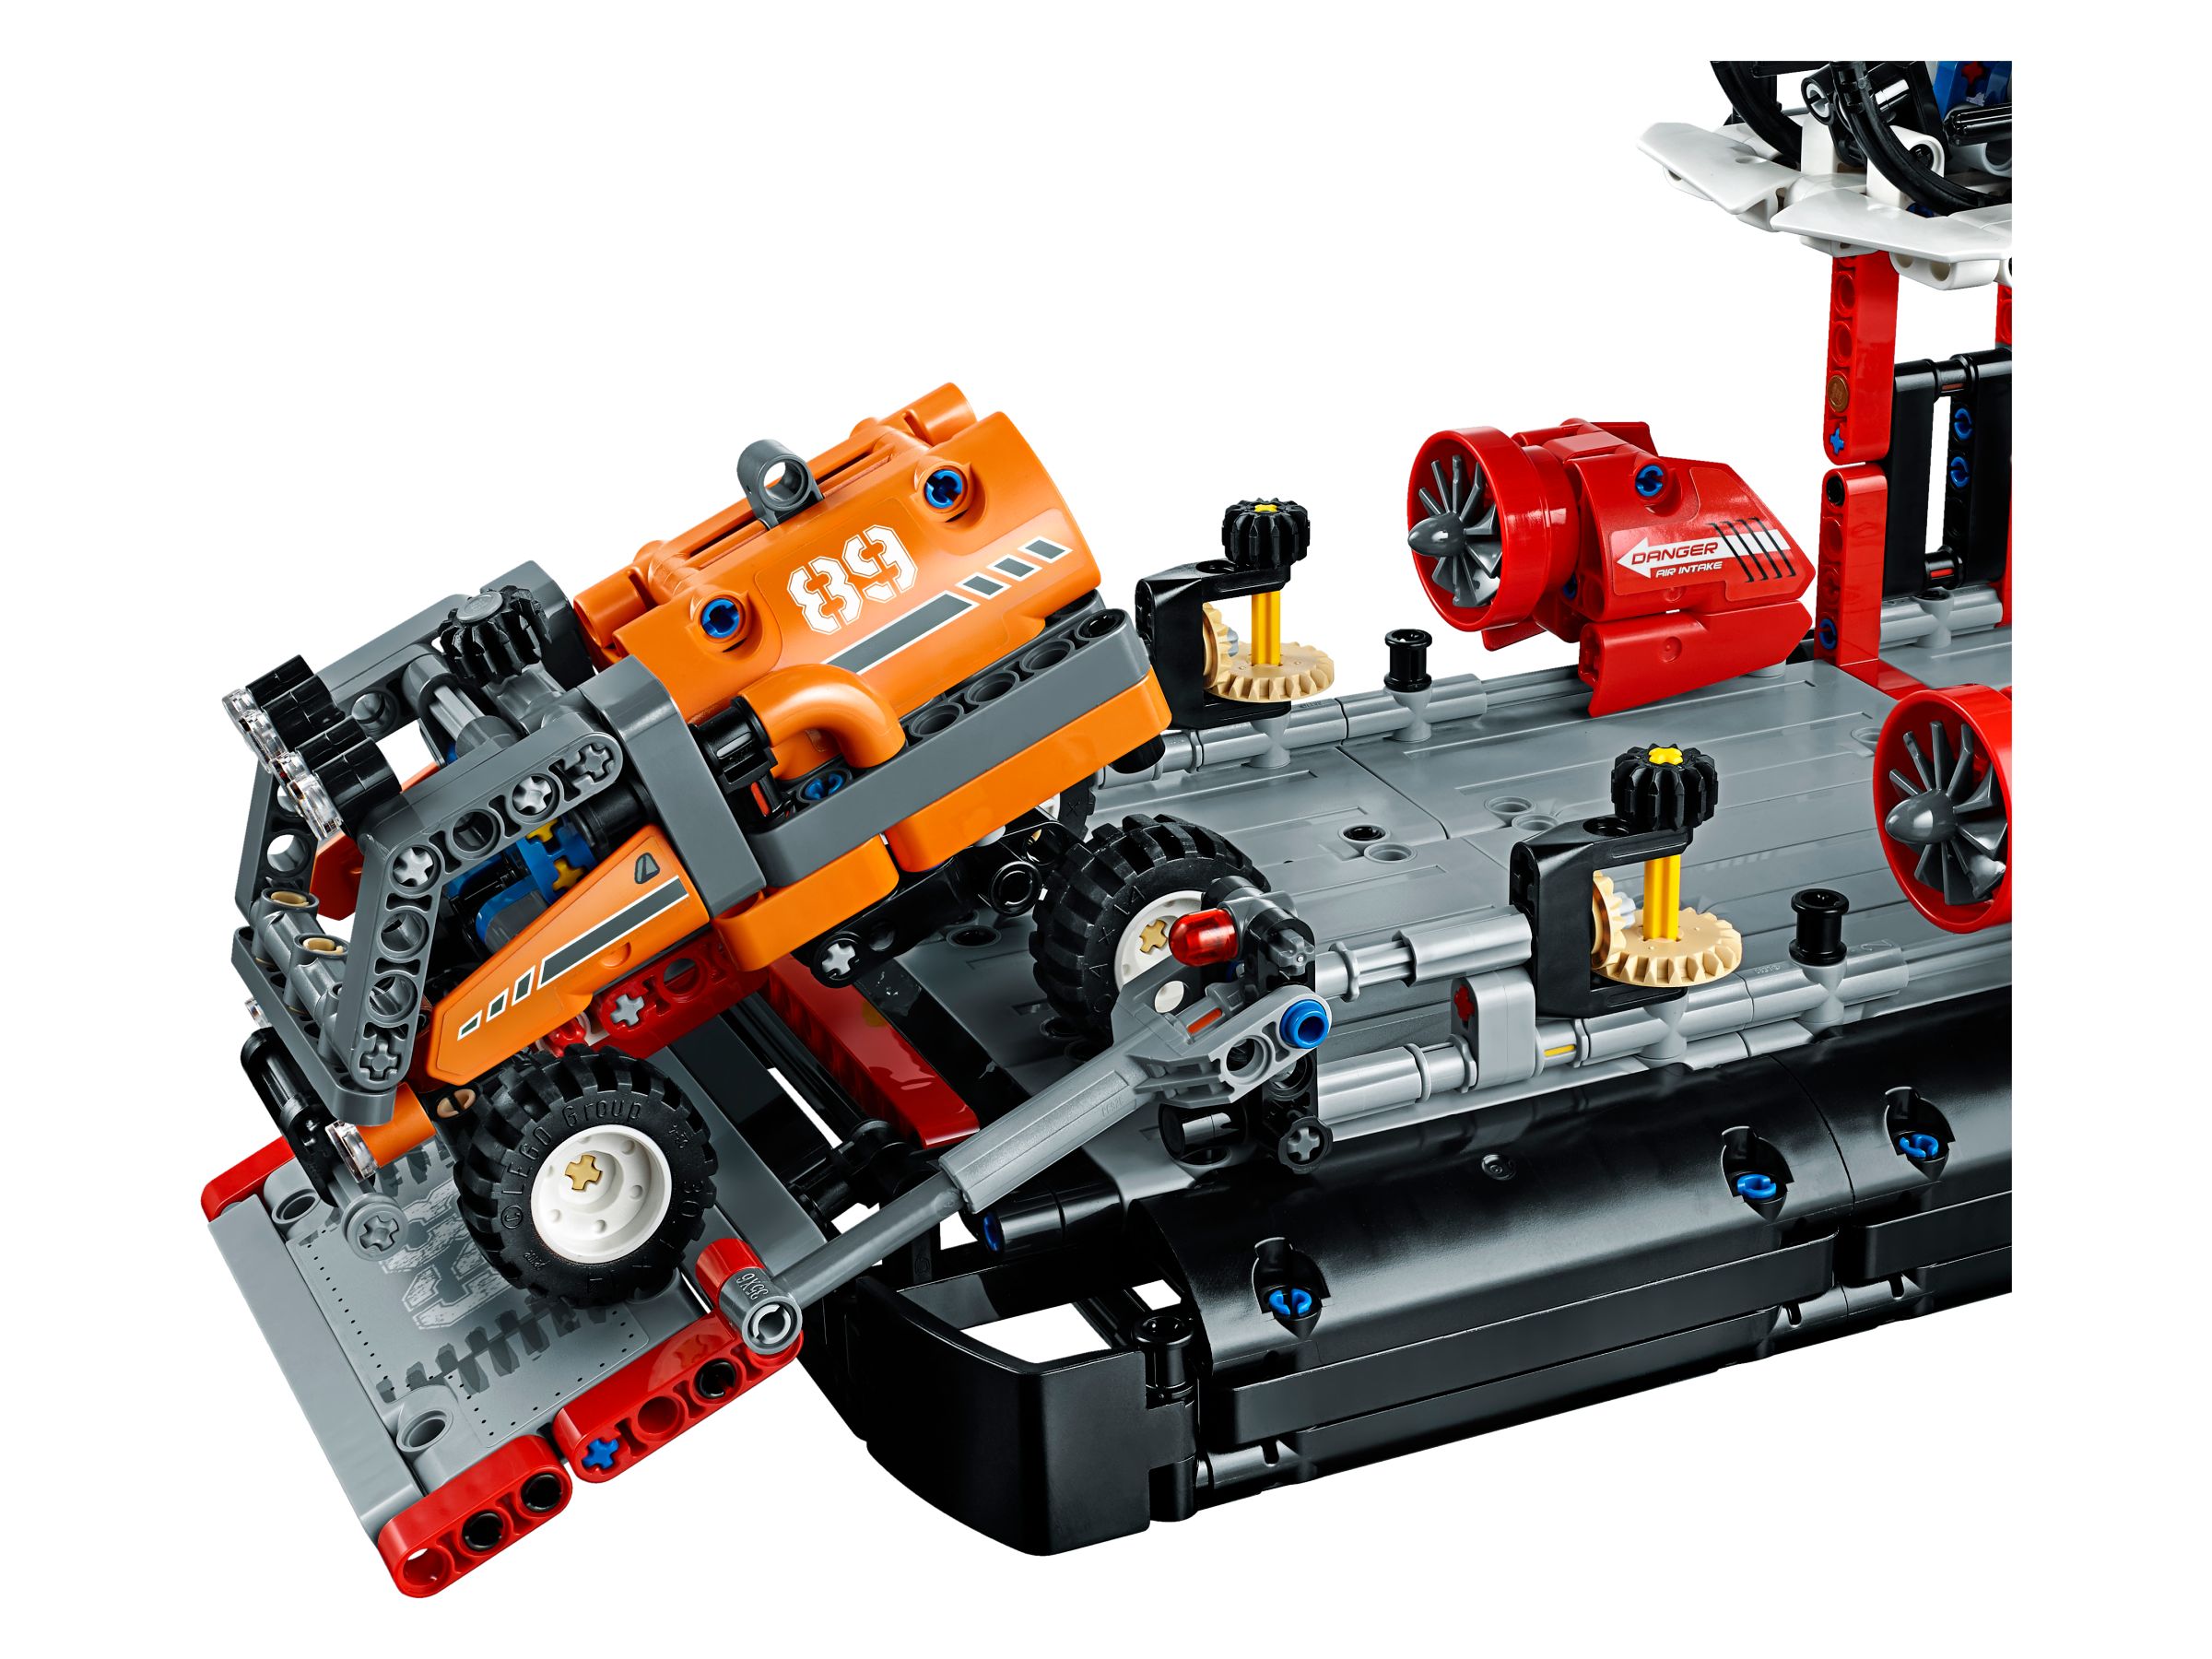 LEGO Technic 42076 Luftkissenboot LEGO_42076_alt4.jpg